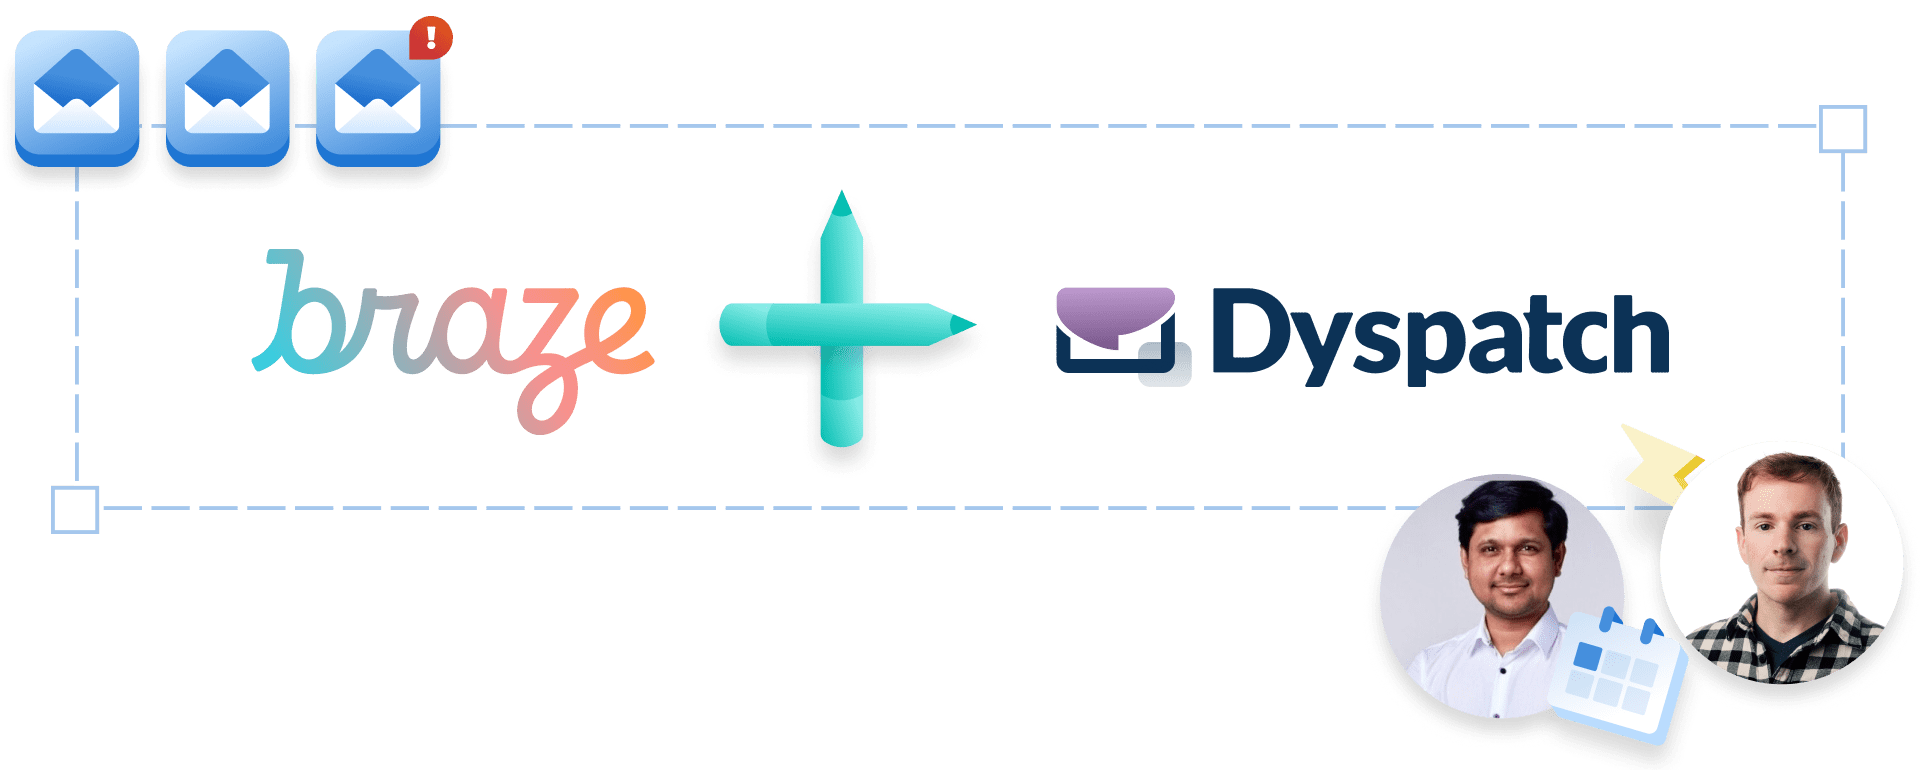 Dyspatch and Braze logos